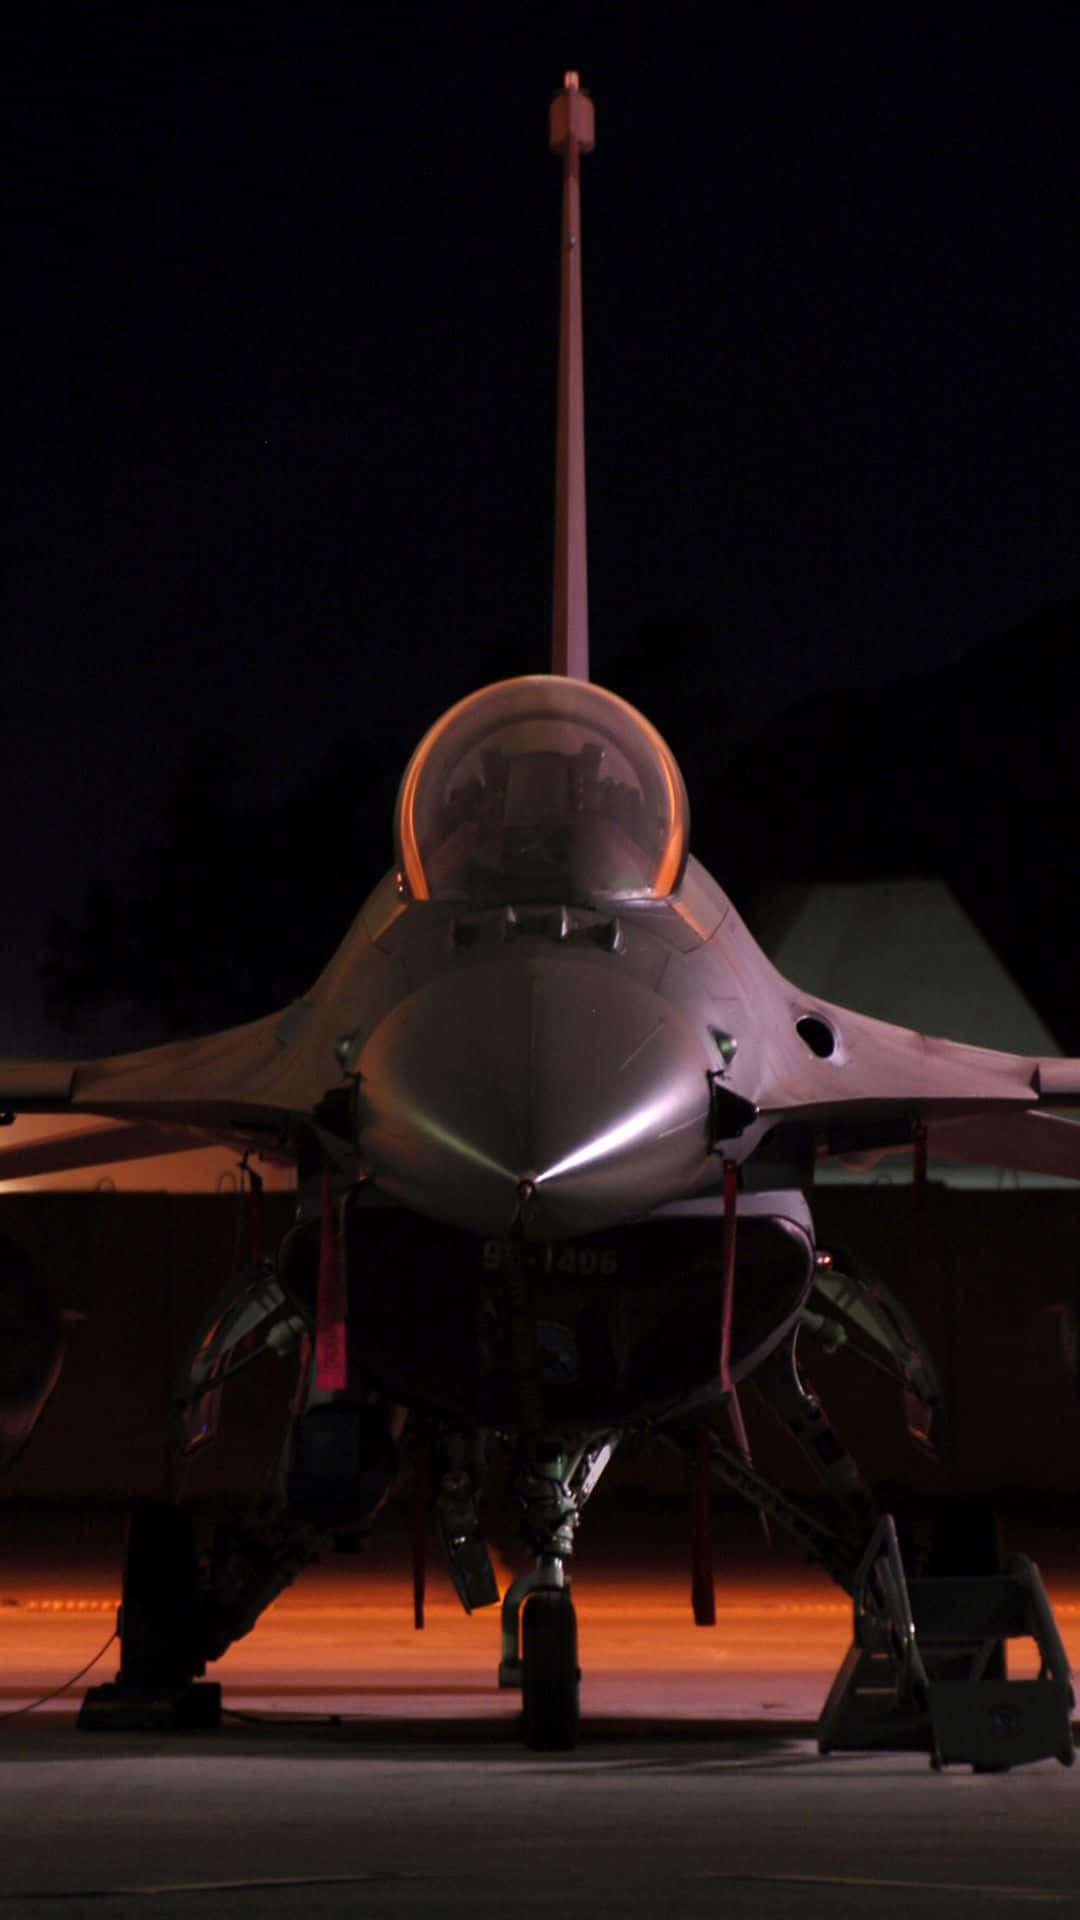 Generaldynamics F16 Fighting Falcon Hintergrundbild Für Android - Jumbo-jet-motiv